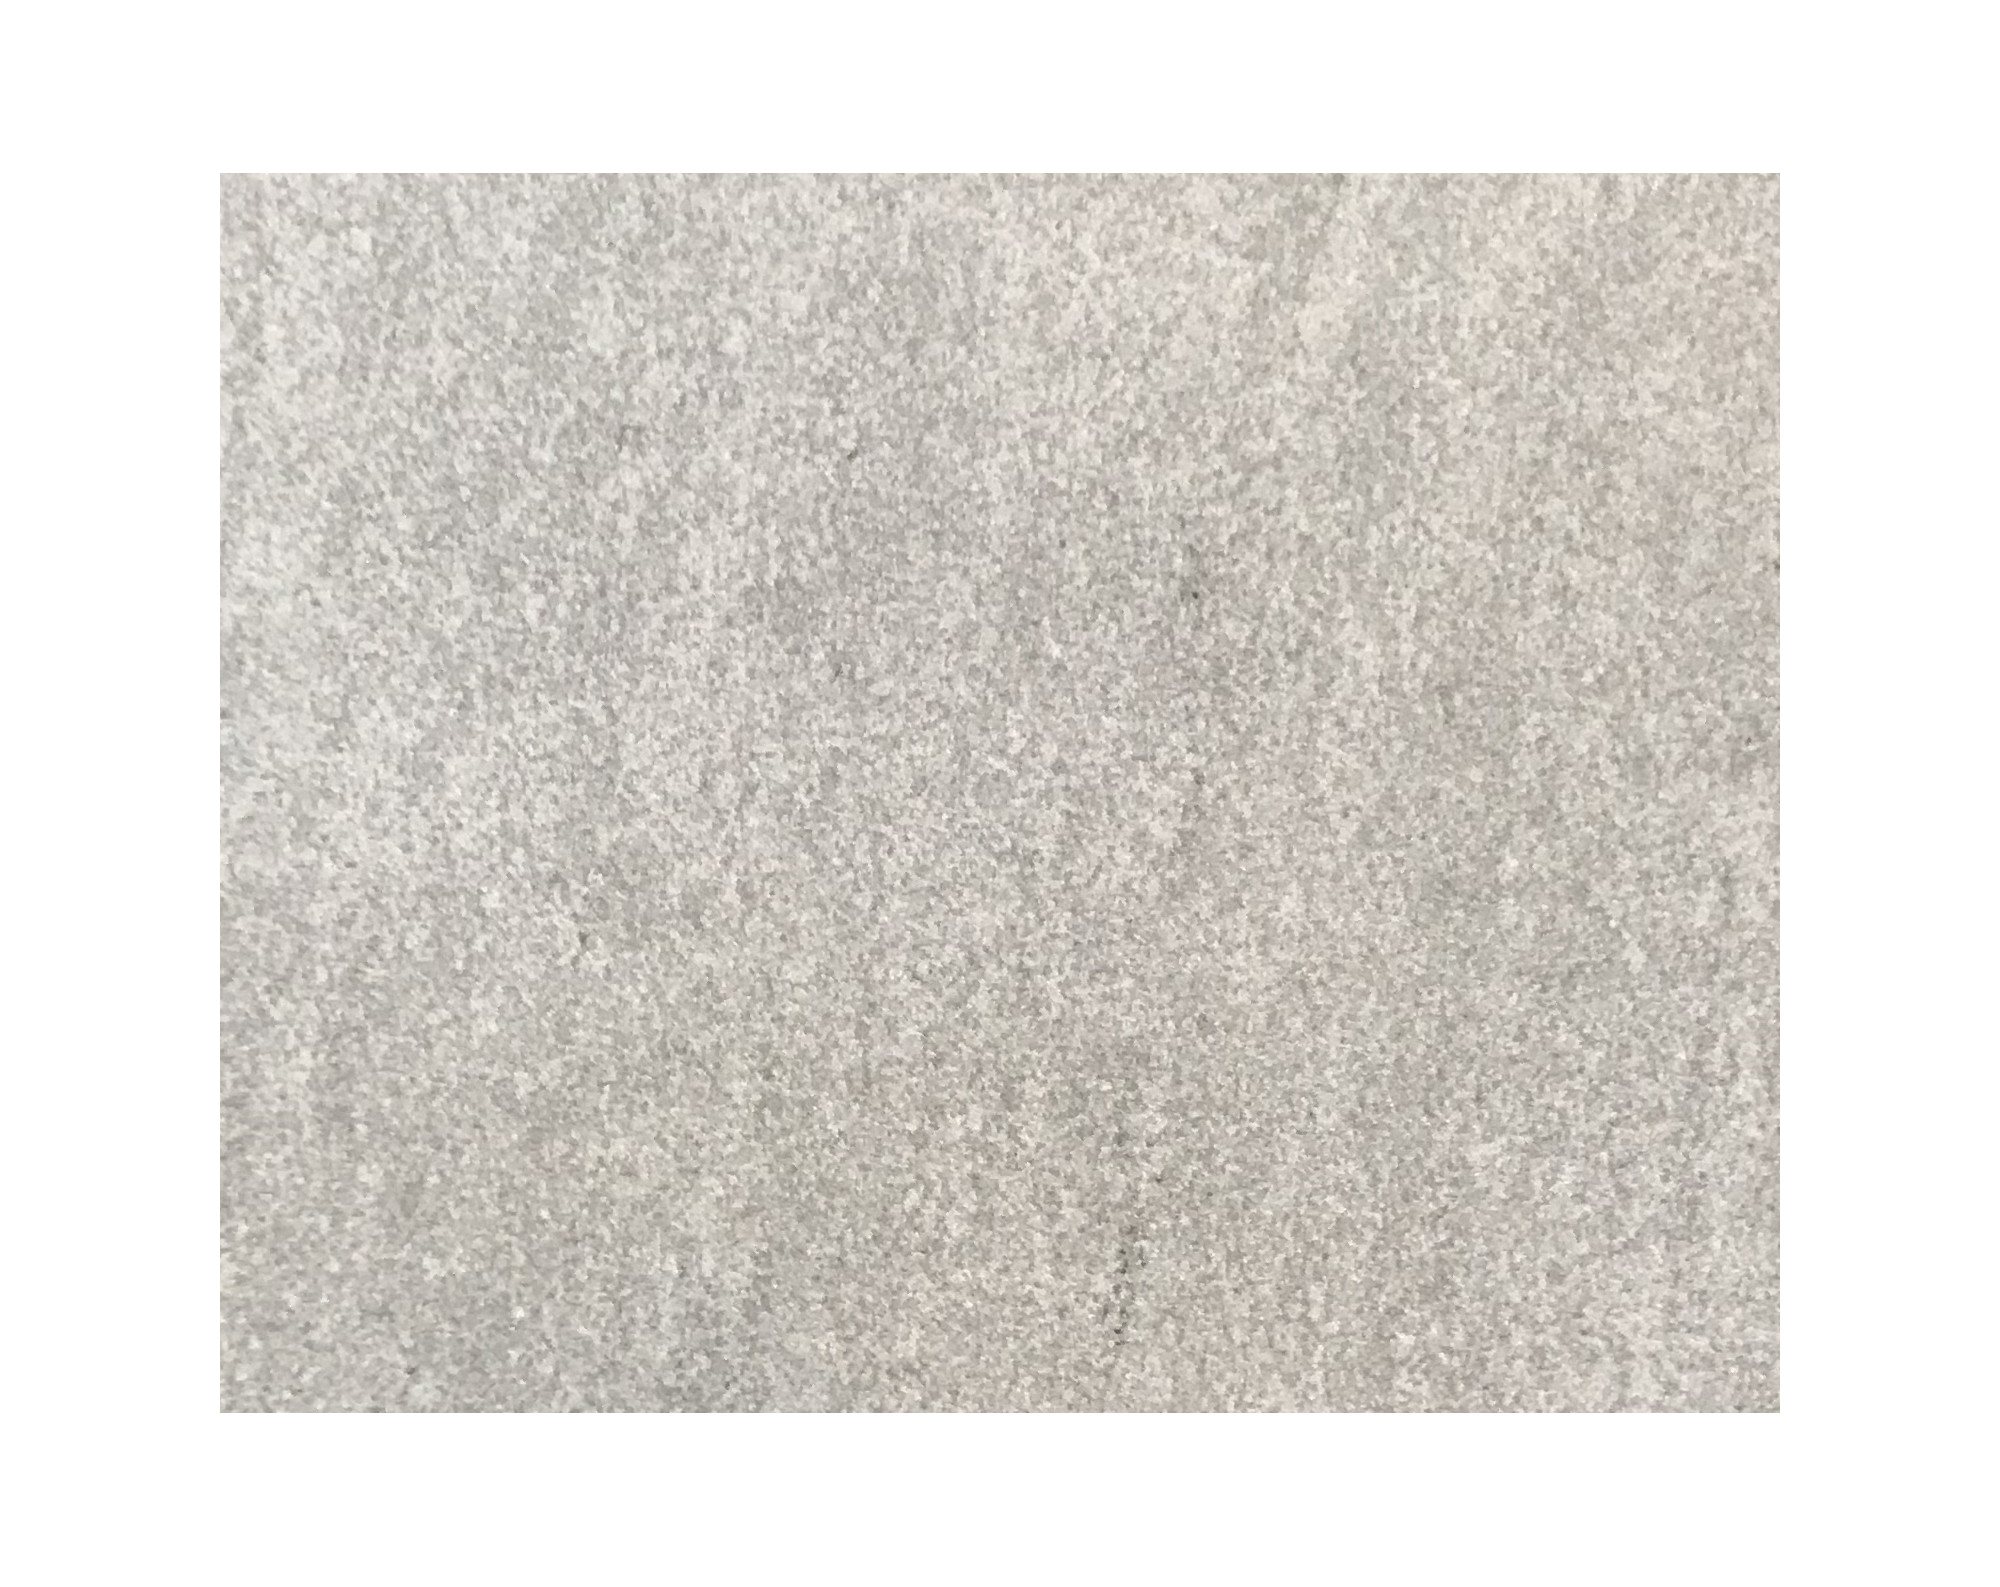 Harmo roc firenzeset, keramiek-serie, ovaal d: 4,20mx9,50m, zand grijs, keramisch porselein